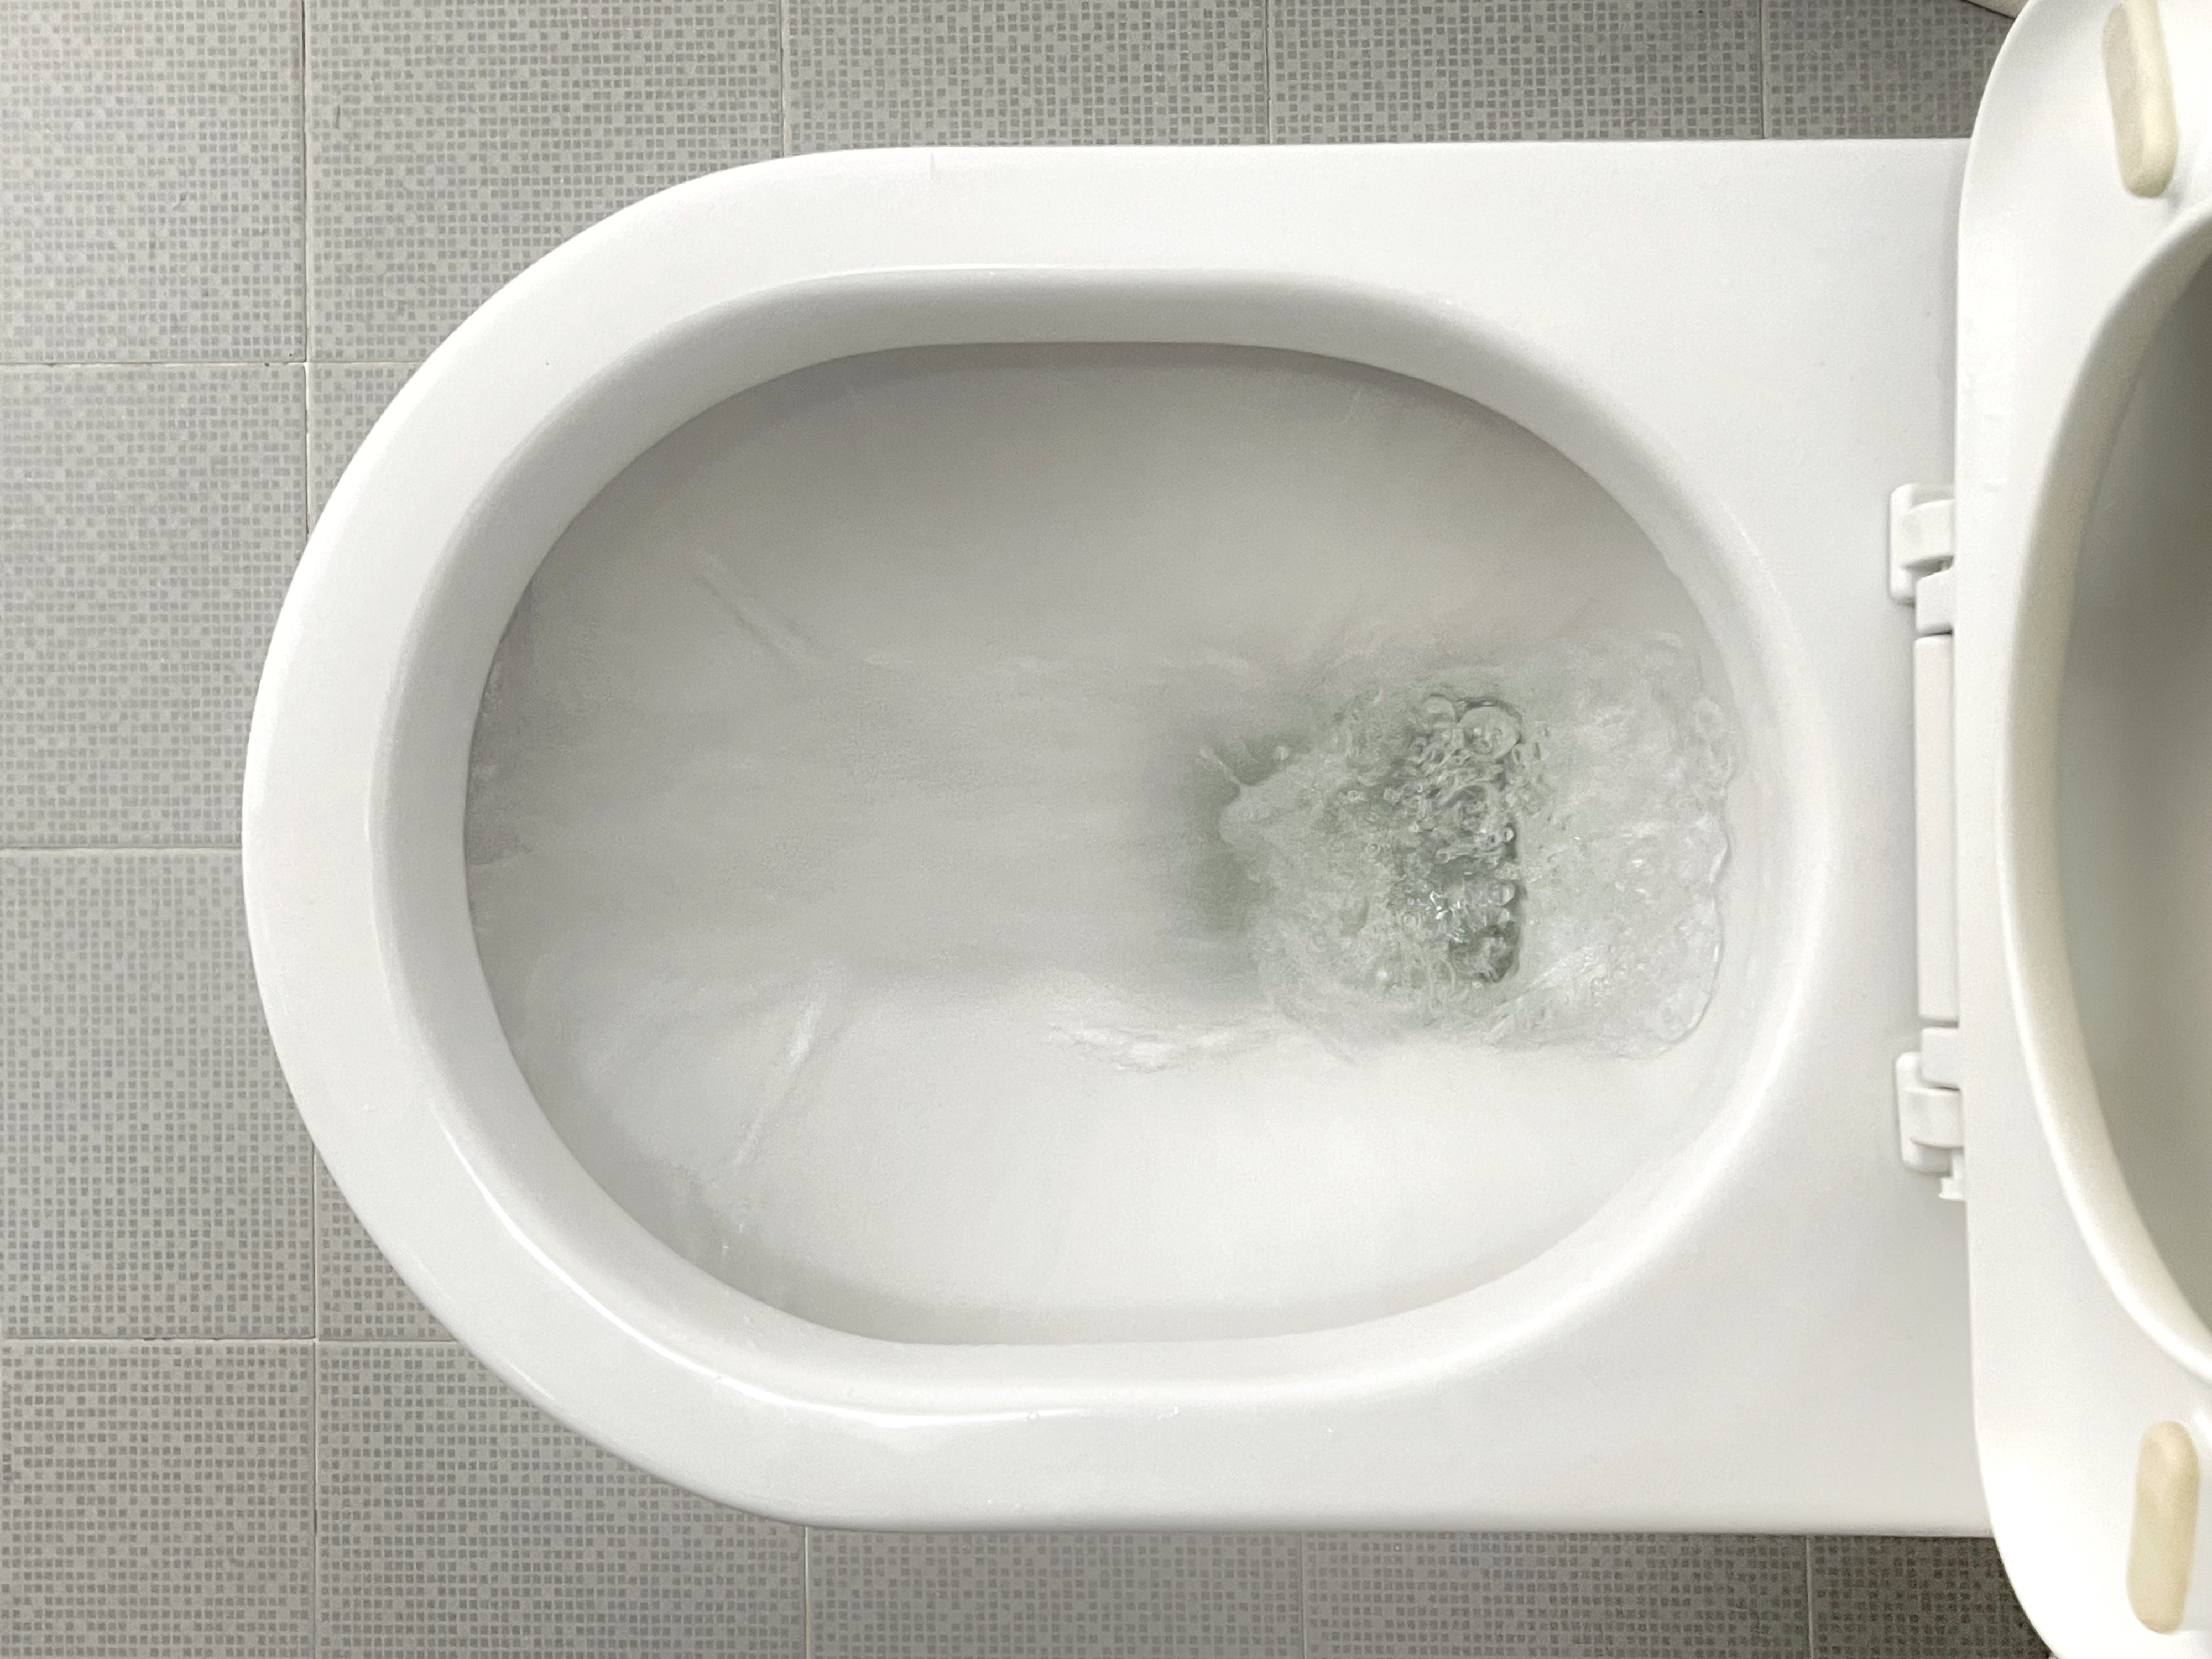 a toilet bowl flushing